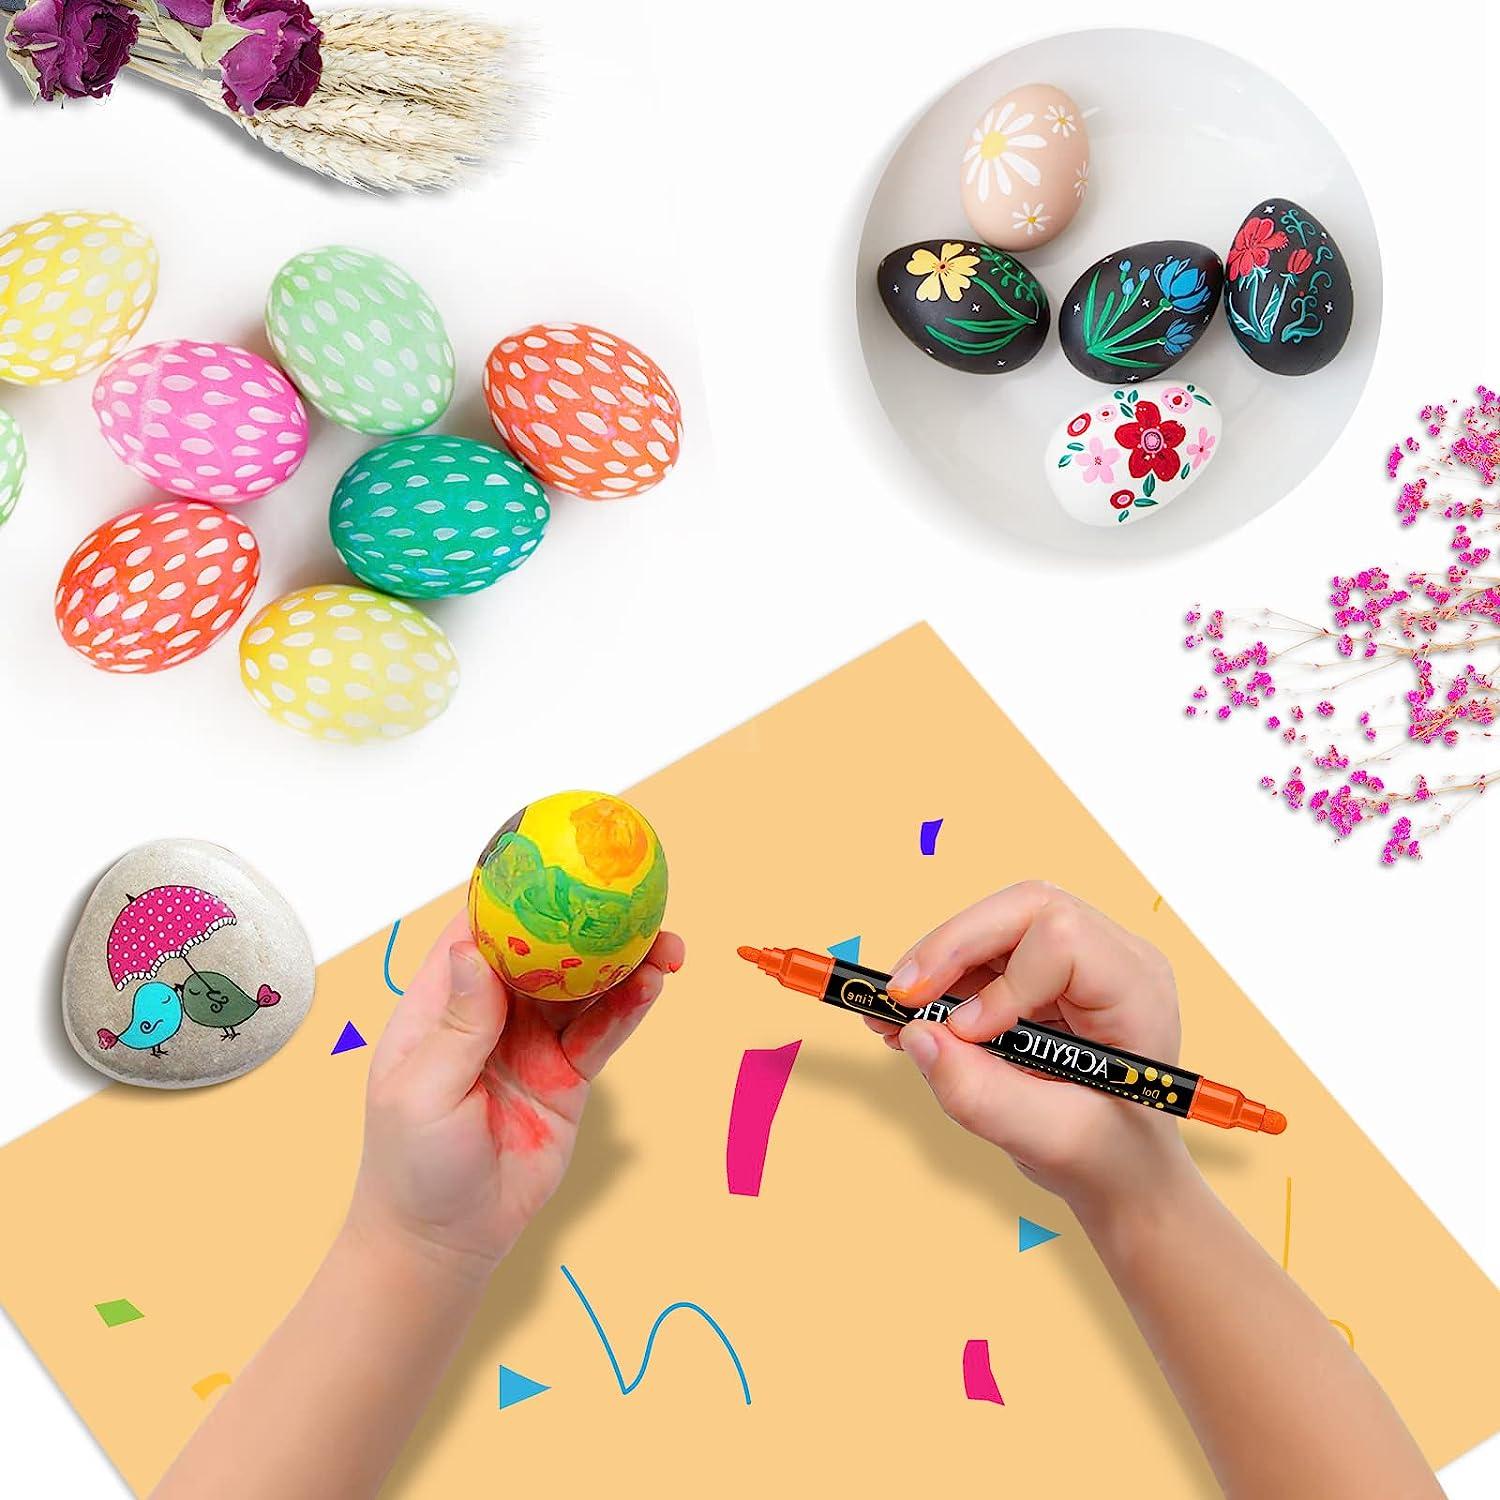 Betem 24 Colors Dual Tip Acrylic Paint Pens Markers, Premium Acrylic Paint  Pens for Wood, Canvas, Stone, Rock Painting, Glass, Ceramic Surfaces, DIY